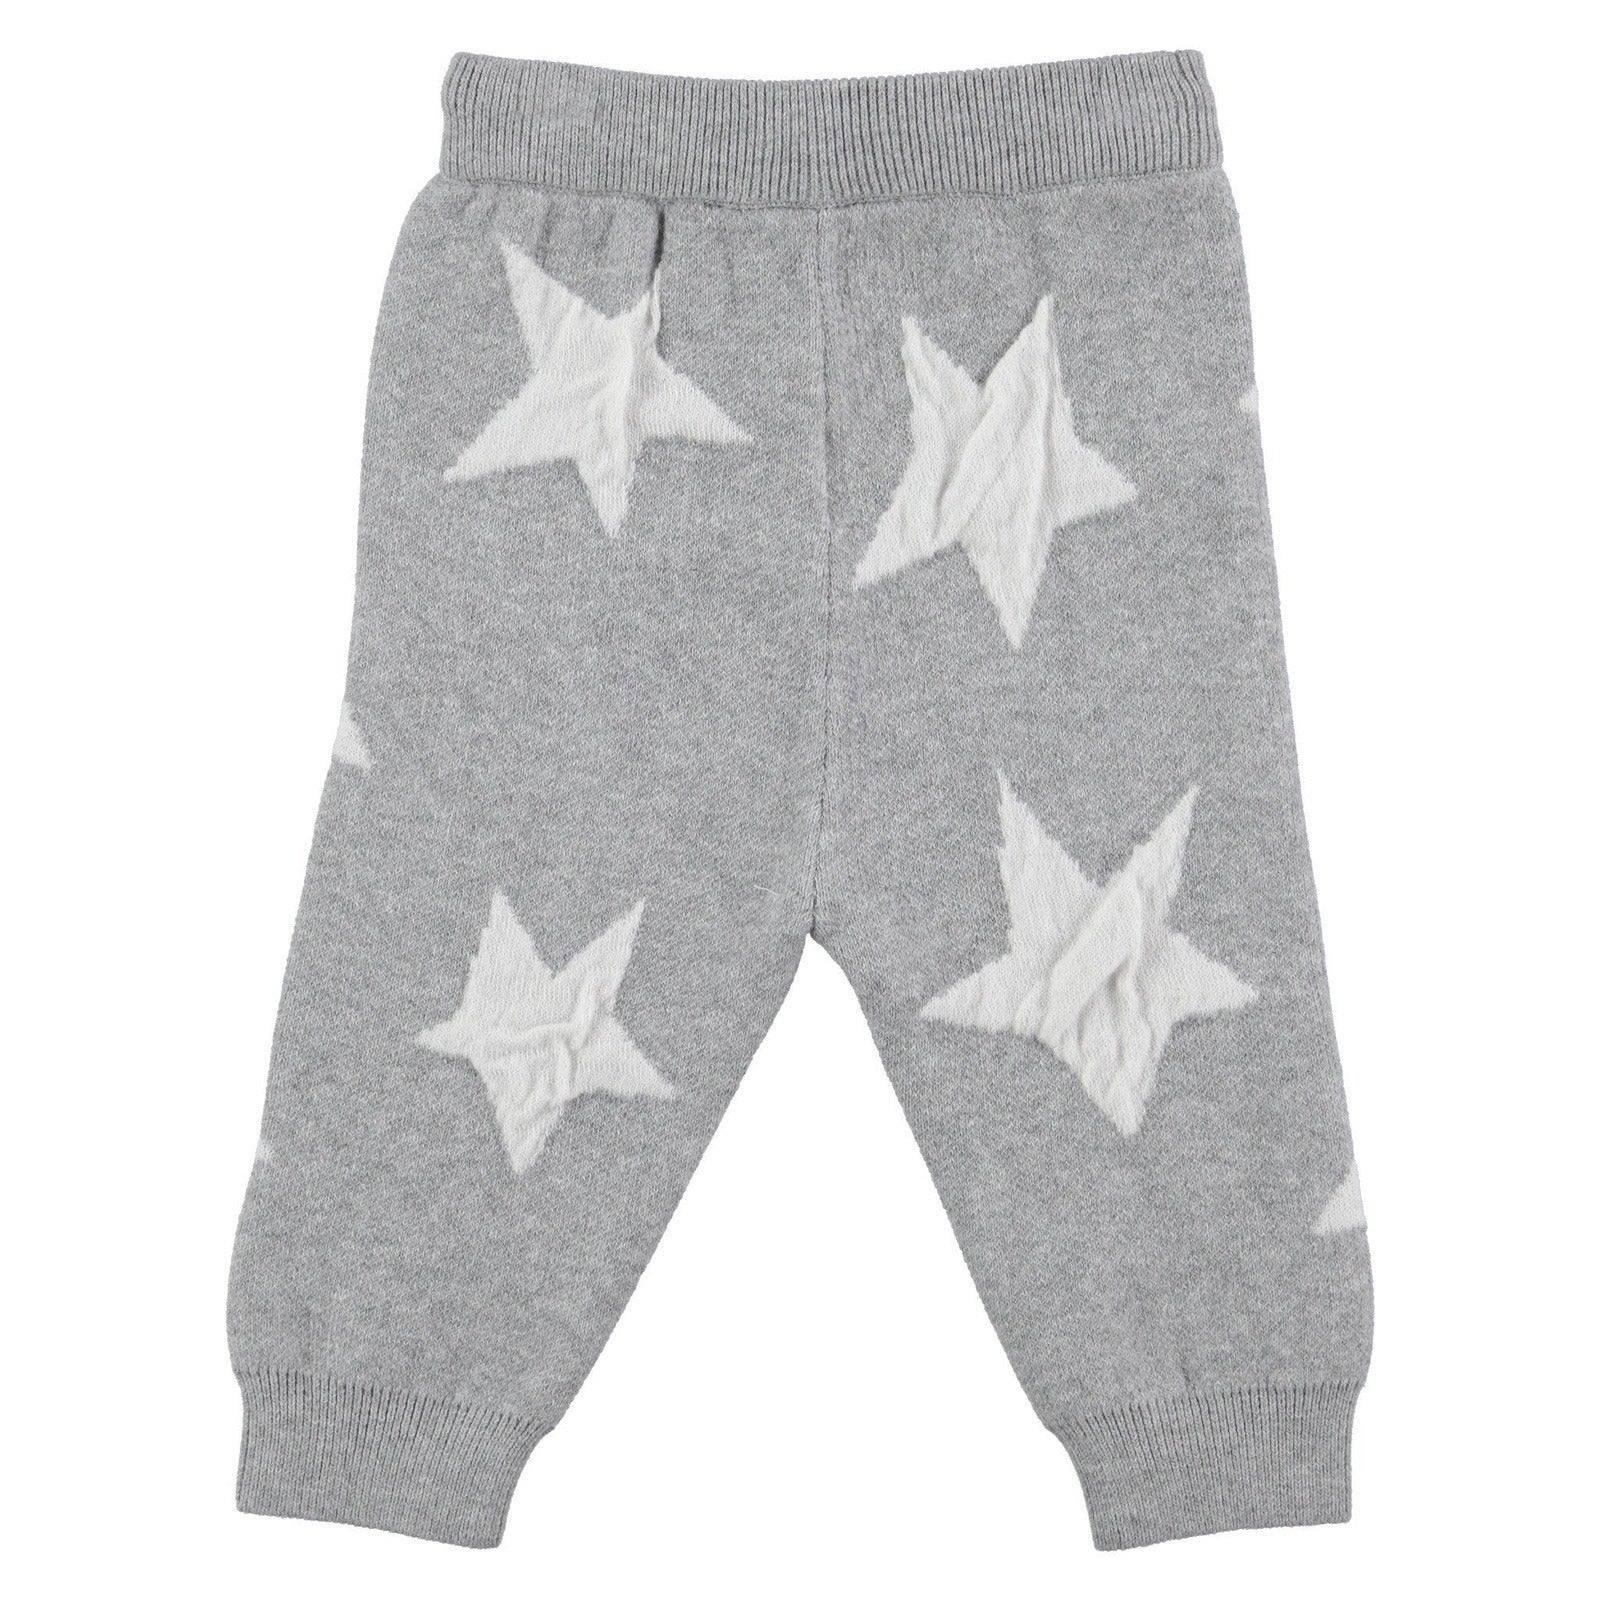 Molo Safira Star Grey Knit Trousers - TAYLOR + MAXMOLO